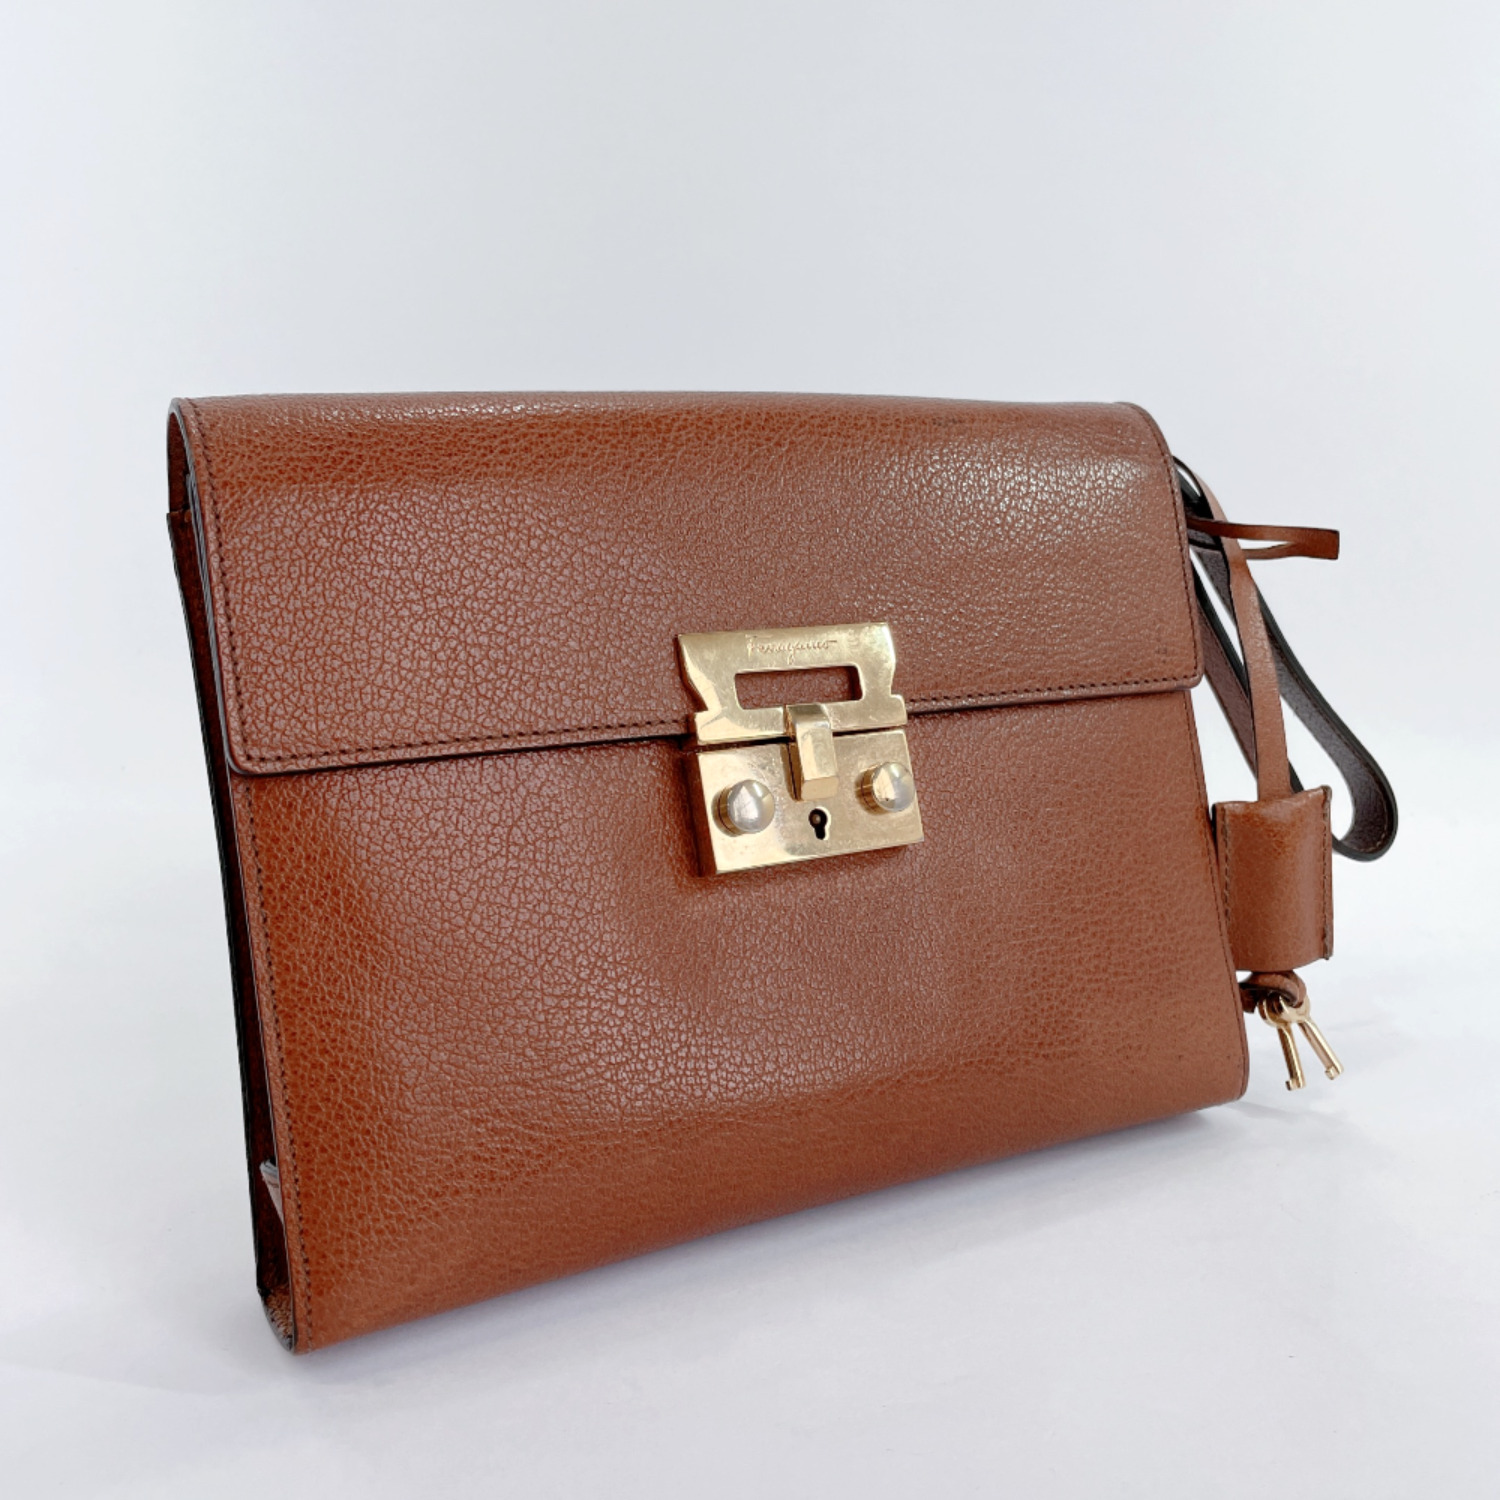 Salvatore Ferragamo Clutch bag 24 9226 vintage leather mens | eBay